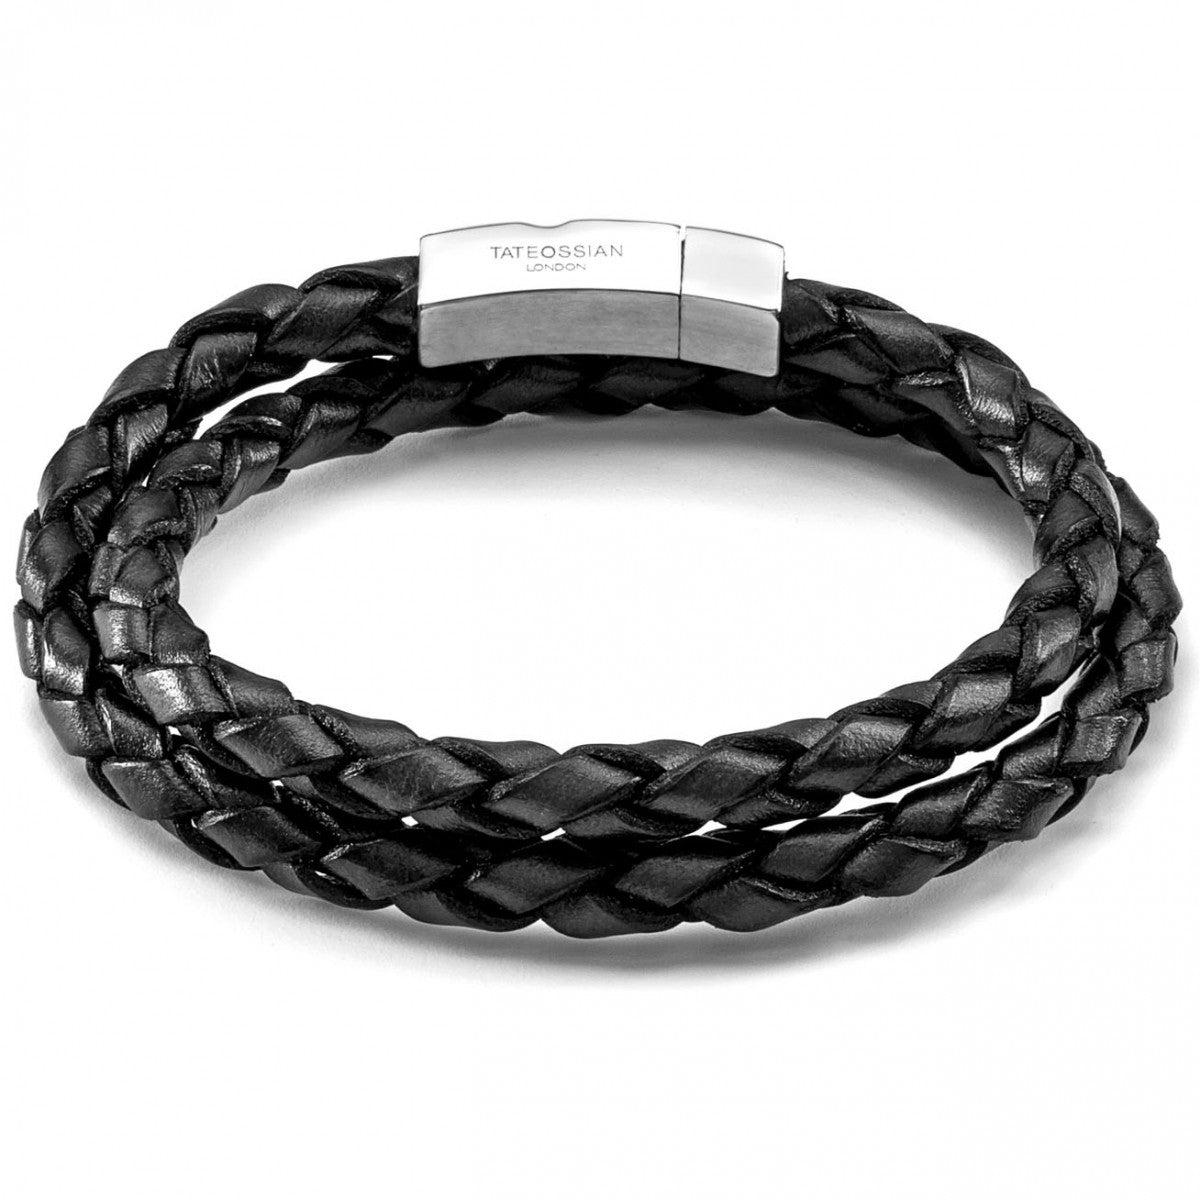 Tateossian Scoubidou Black Leather Double Wrap Bracelet Lge 45cm